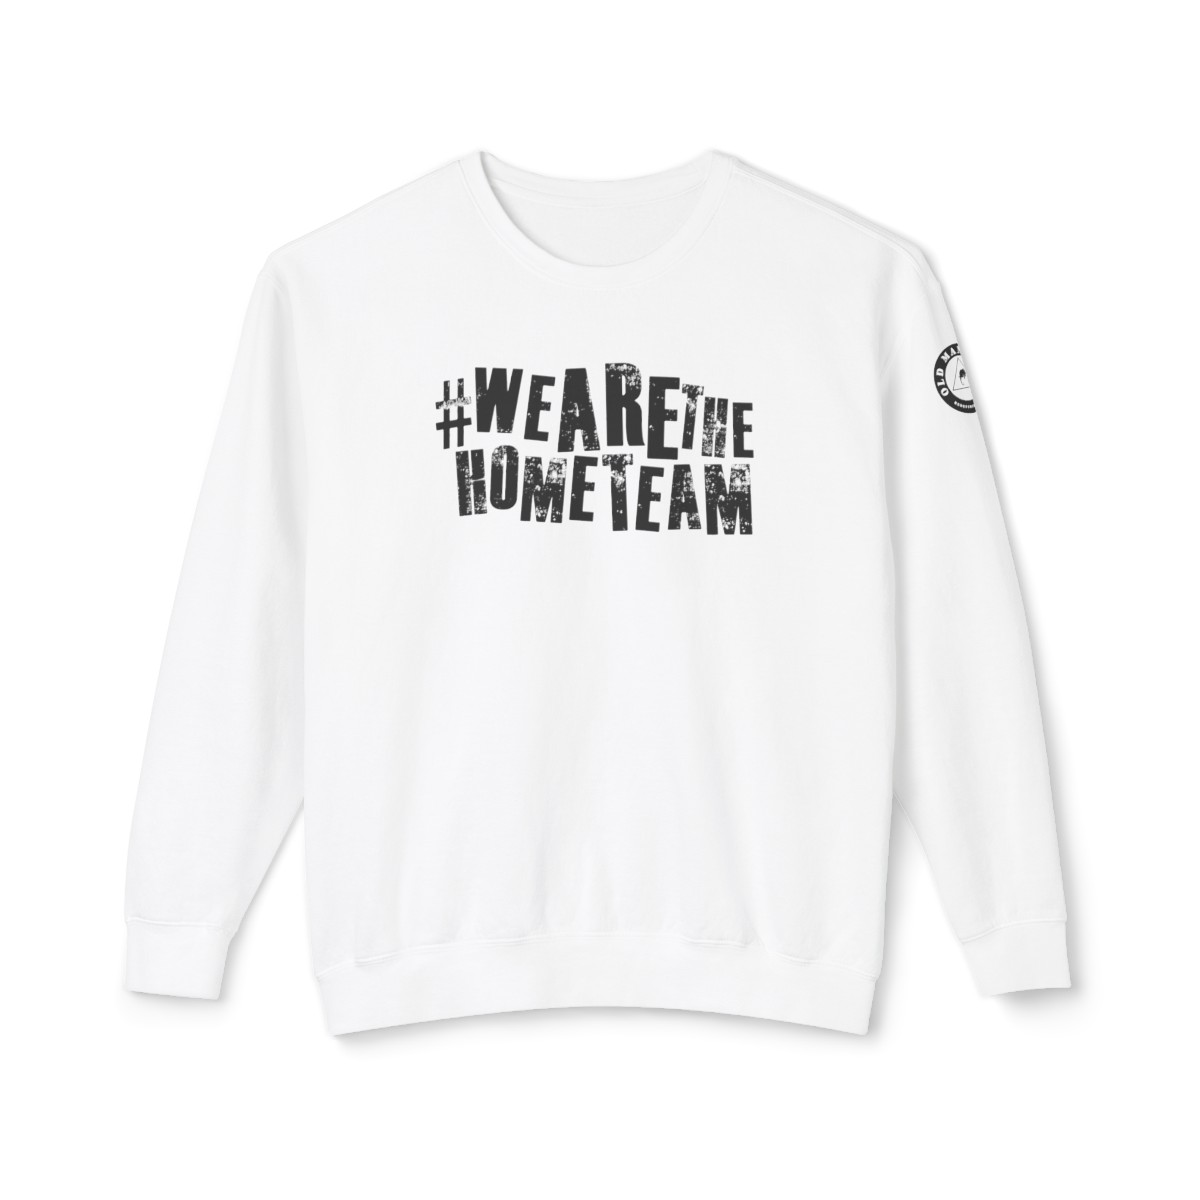 A white sweatshirt with the words " wearete doneteam ".